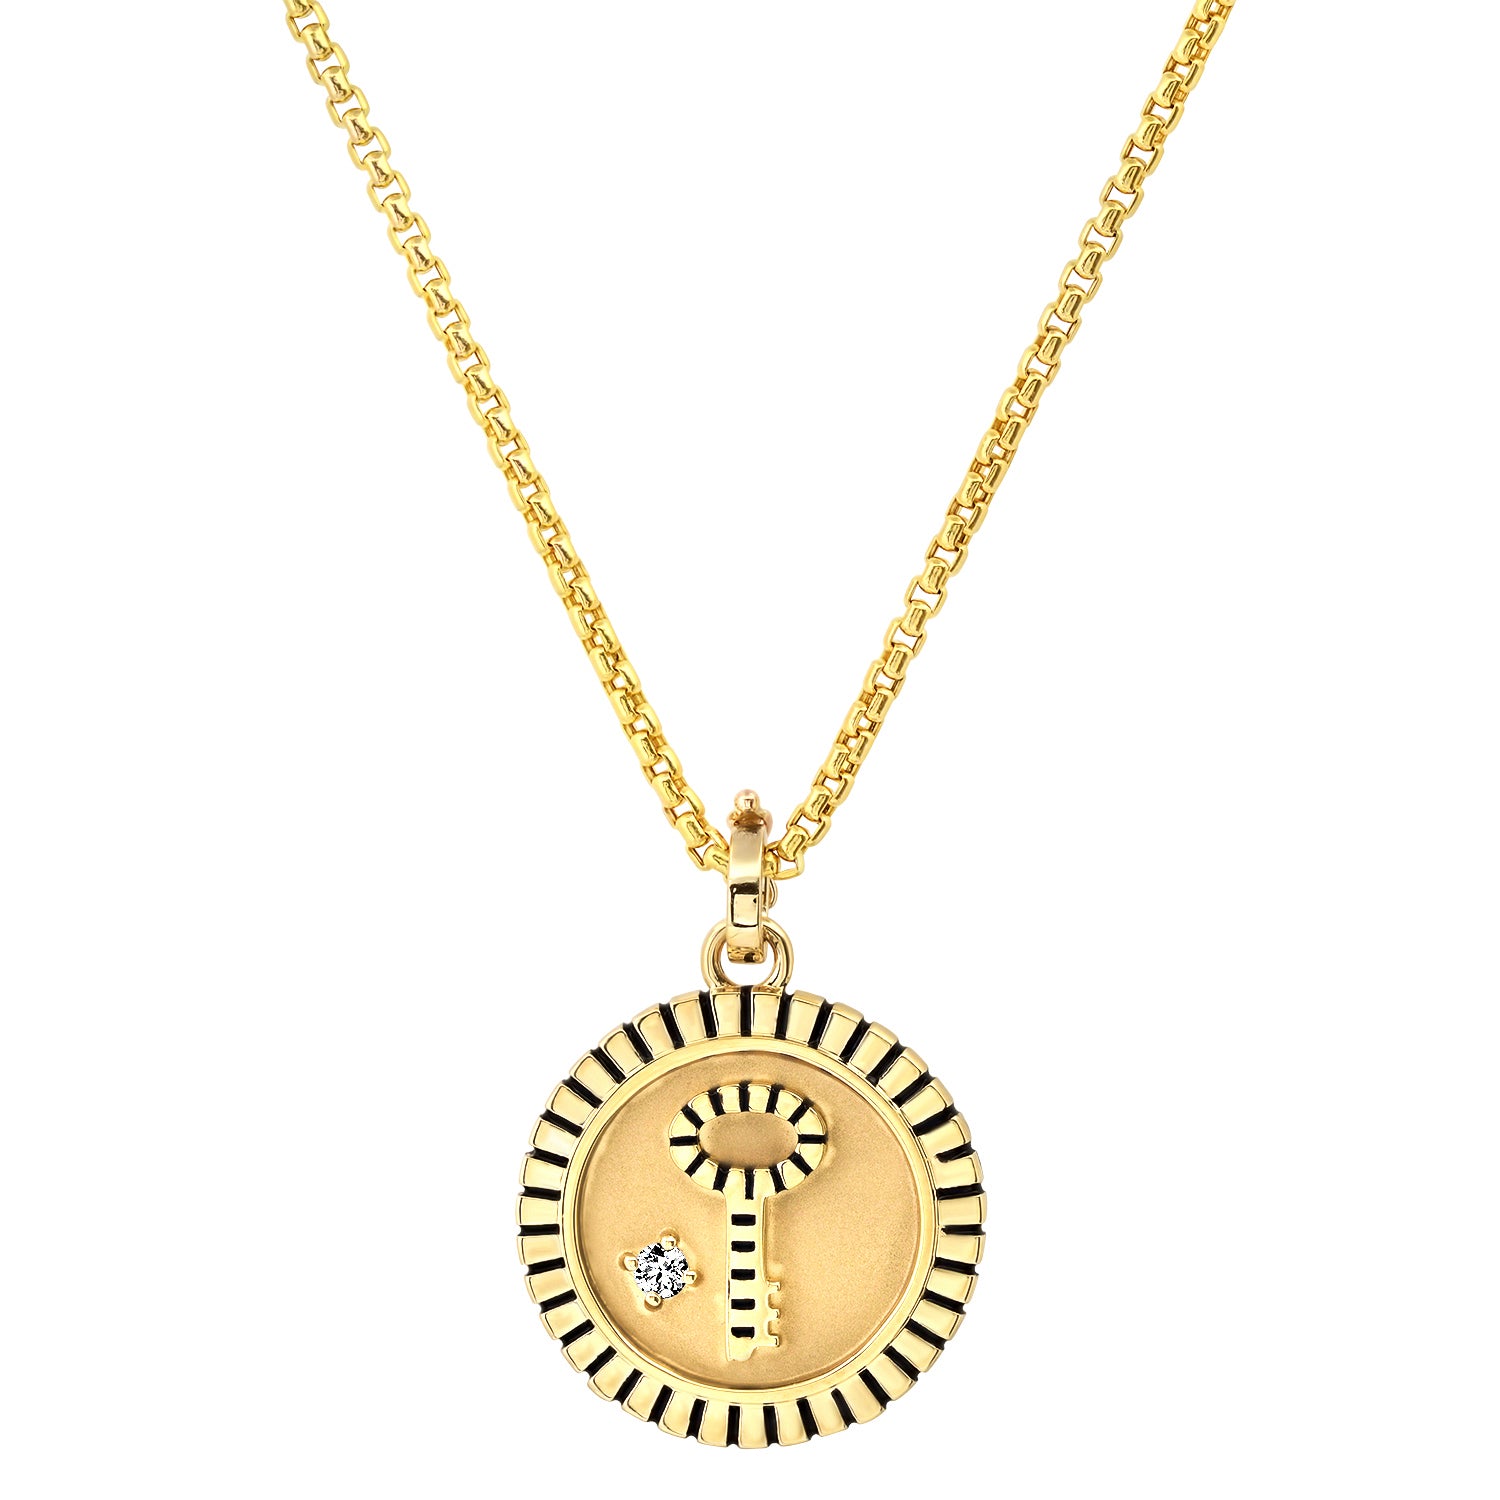 Key Gold Pendant Necklace Pendant Helena Rose Jewelry 16" Chain  